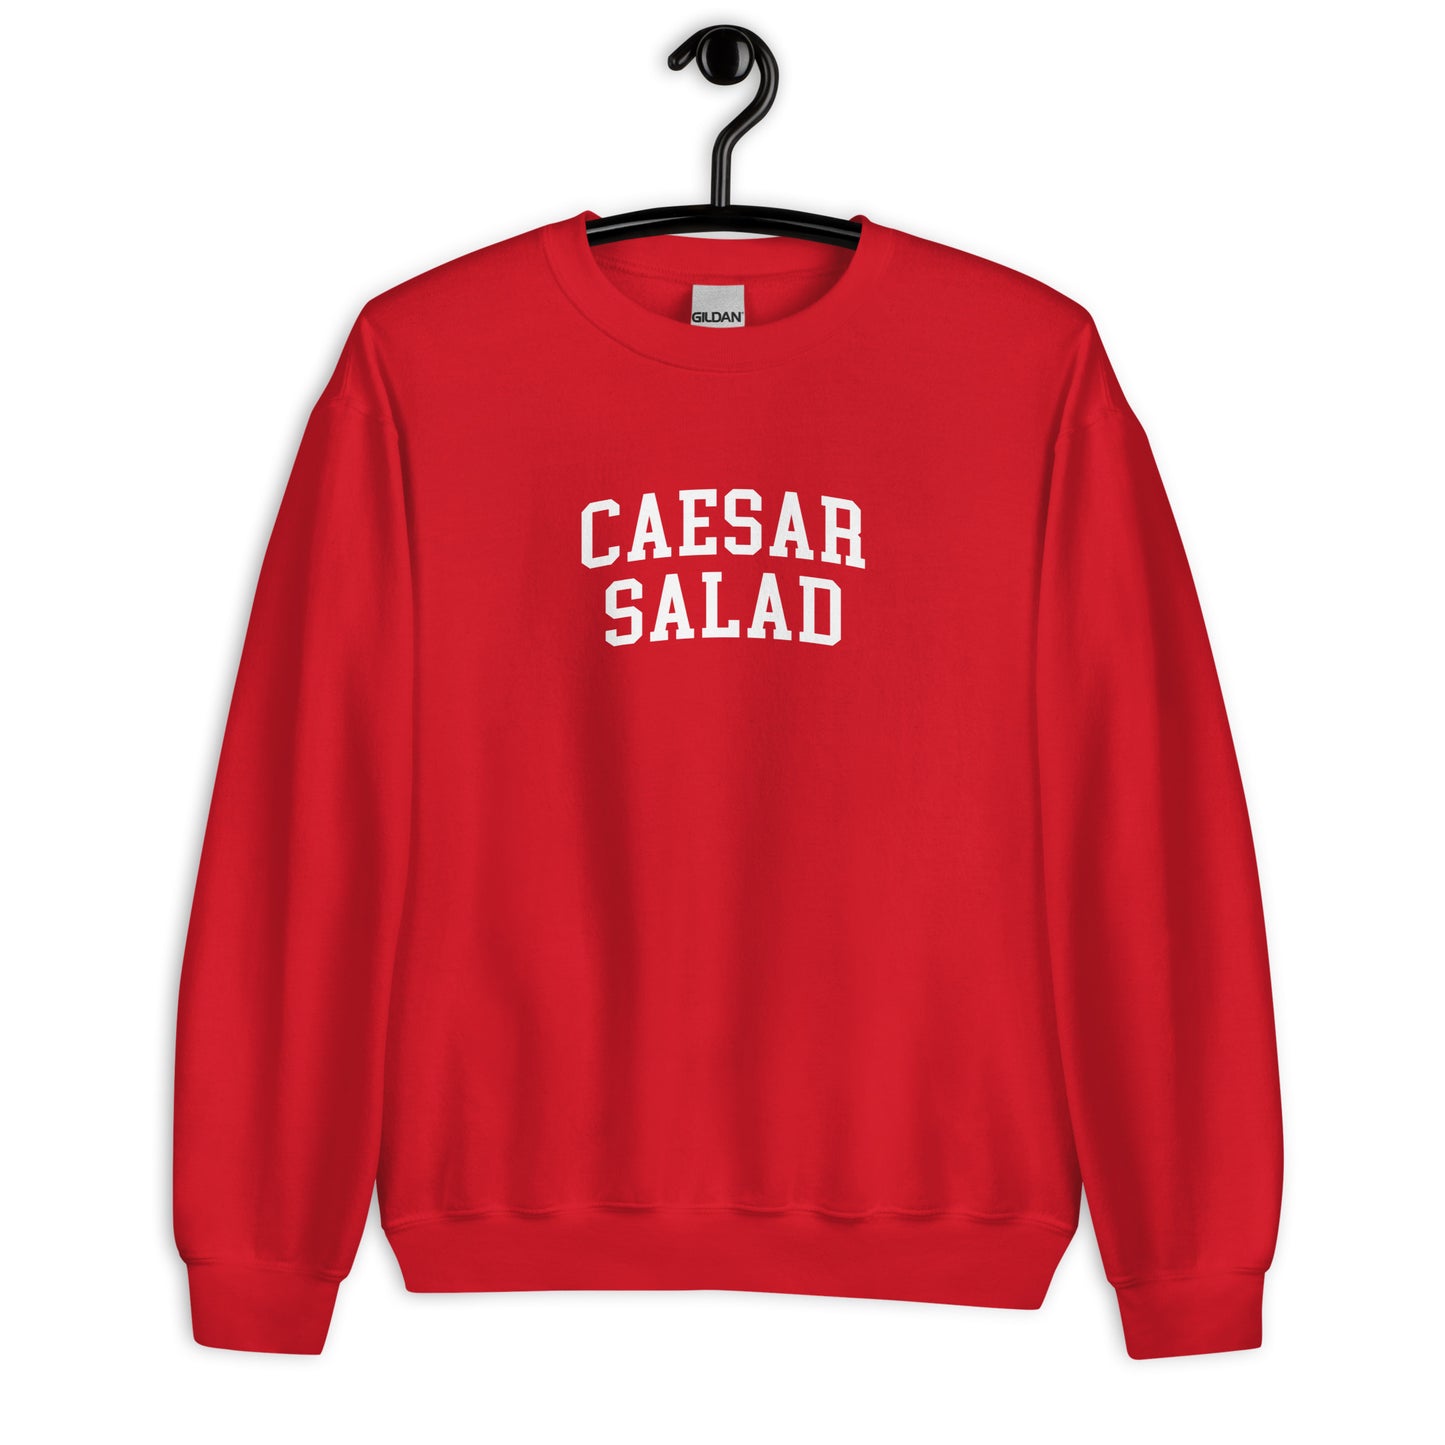 Caesar Salad Sweatshirt - Arched Font